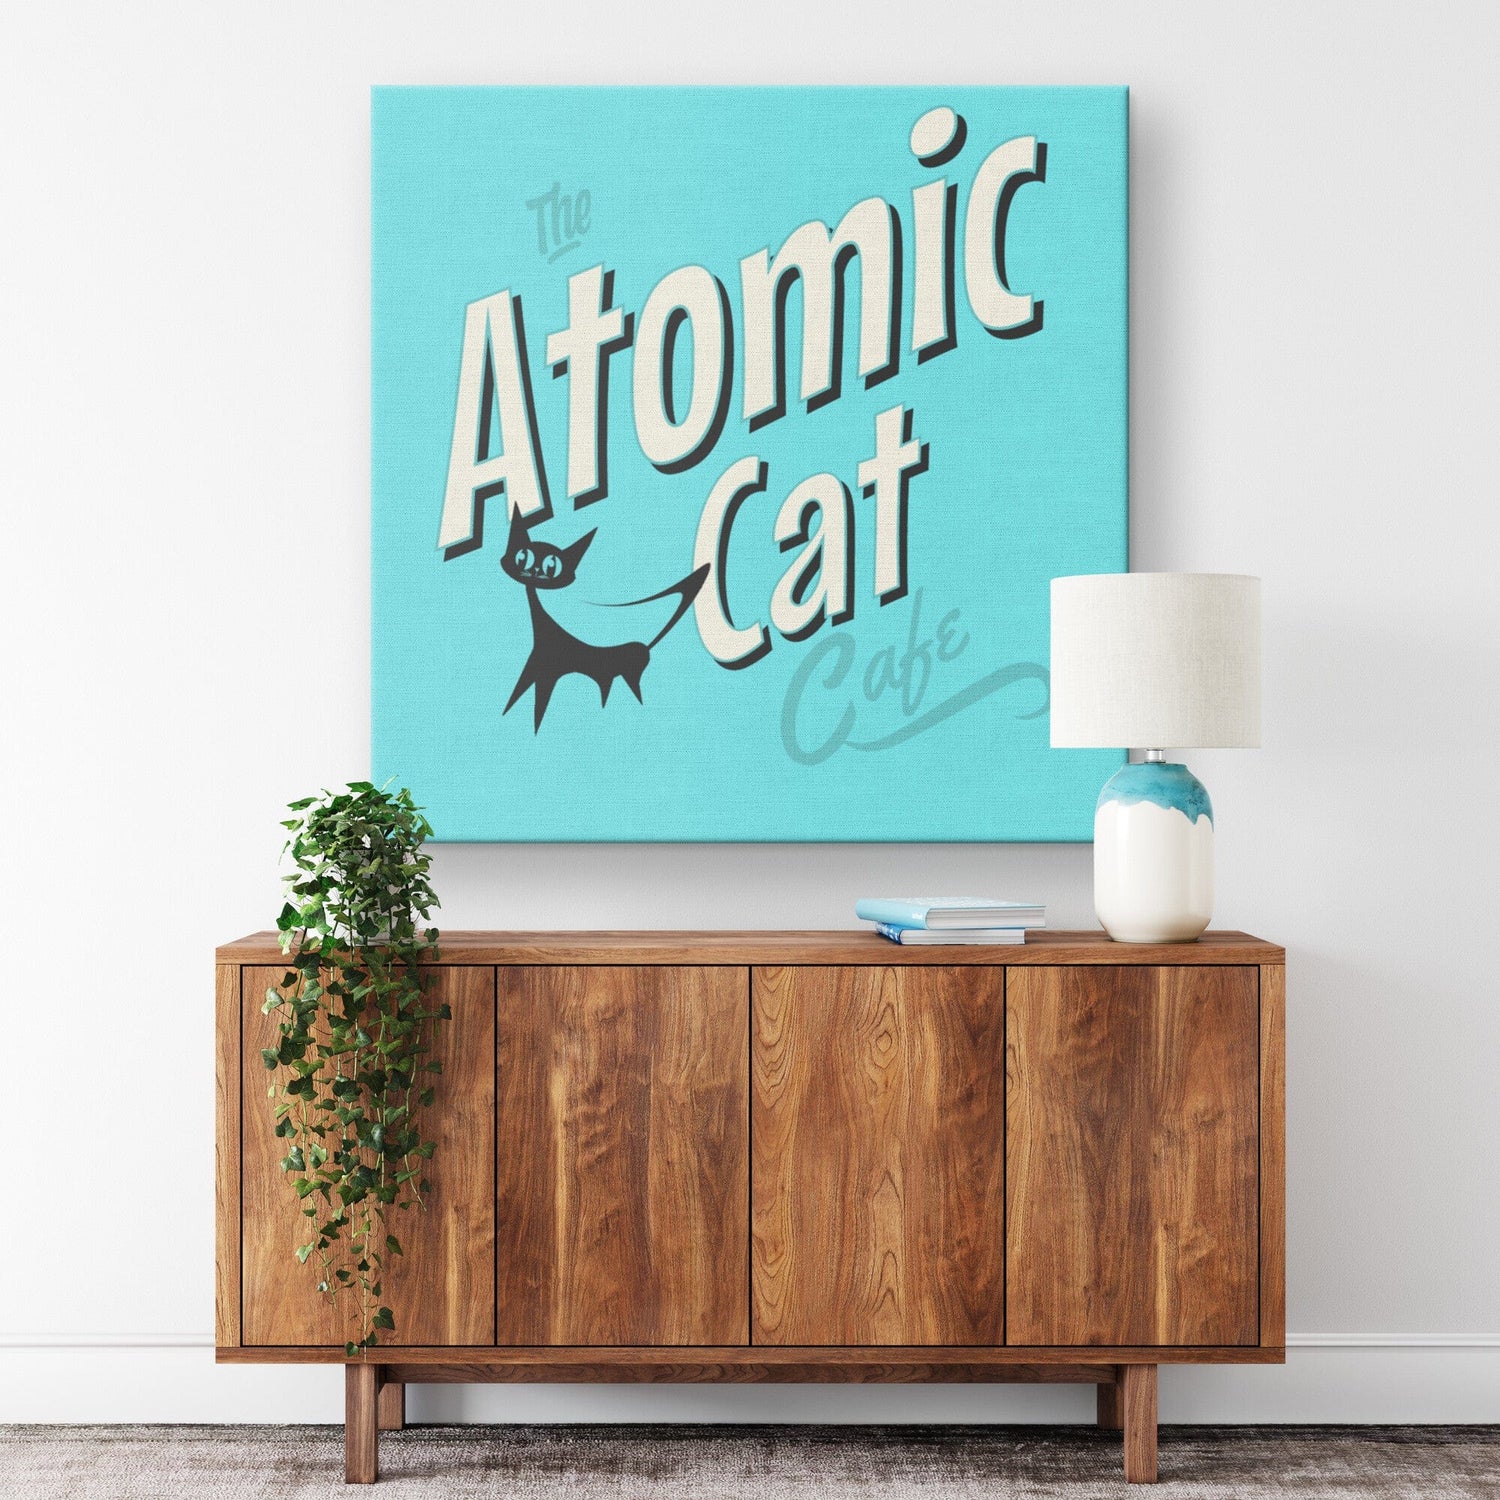 Retro Kitchen Art, Atomic Cat Cafe, Aqua Blue, Mid Mod Kitschy Wall Canvas Wall Art